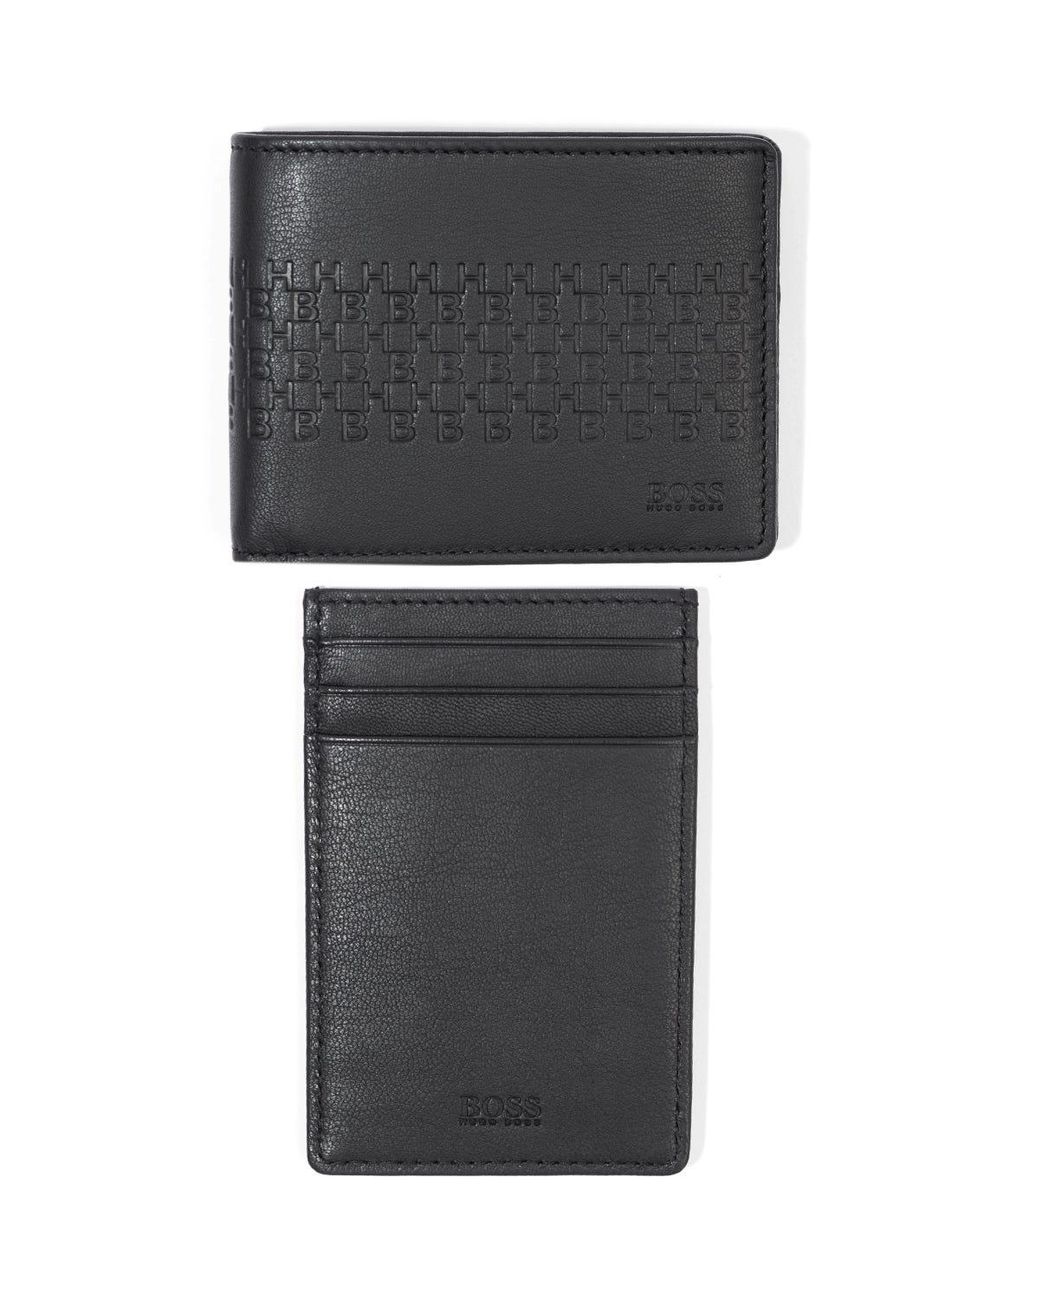 BOSS by HUGO BOSS Monogram Leather Wallet & Card Holder Gift Box Set in ...